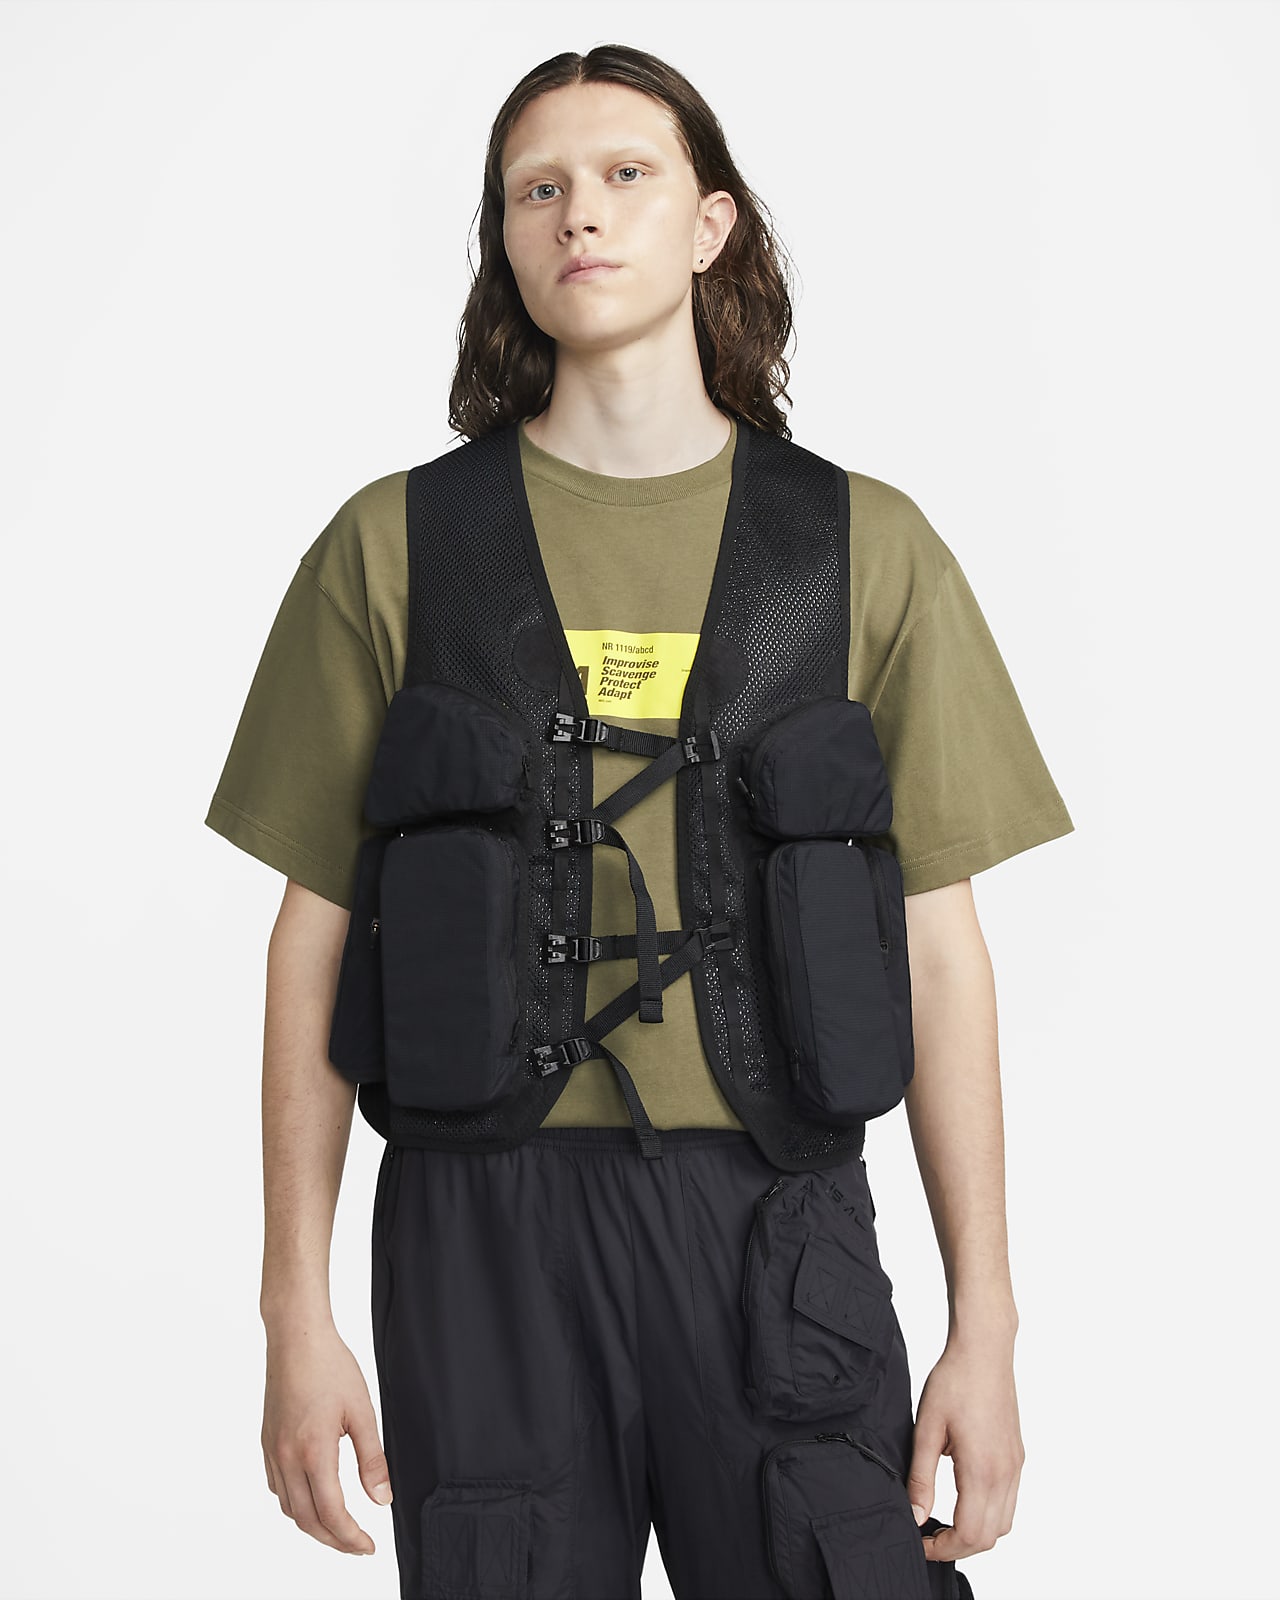 Nike ISPA Men's Vest